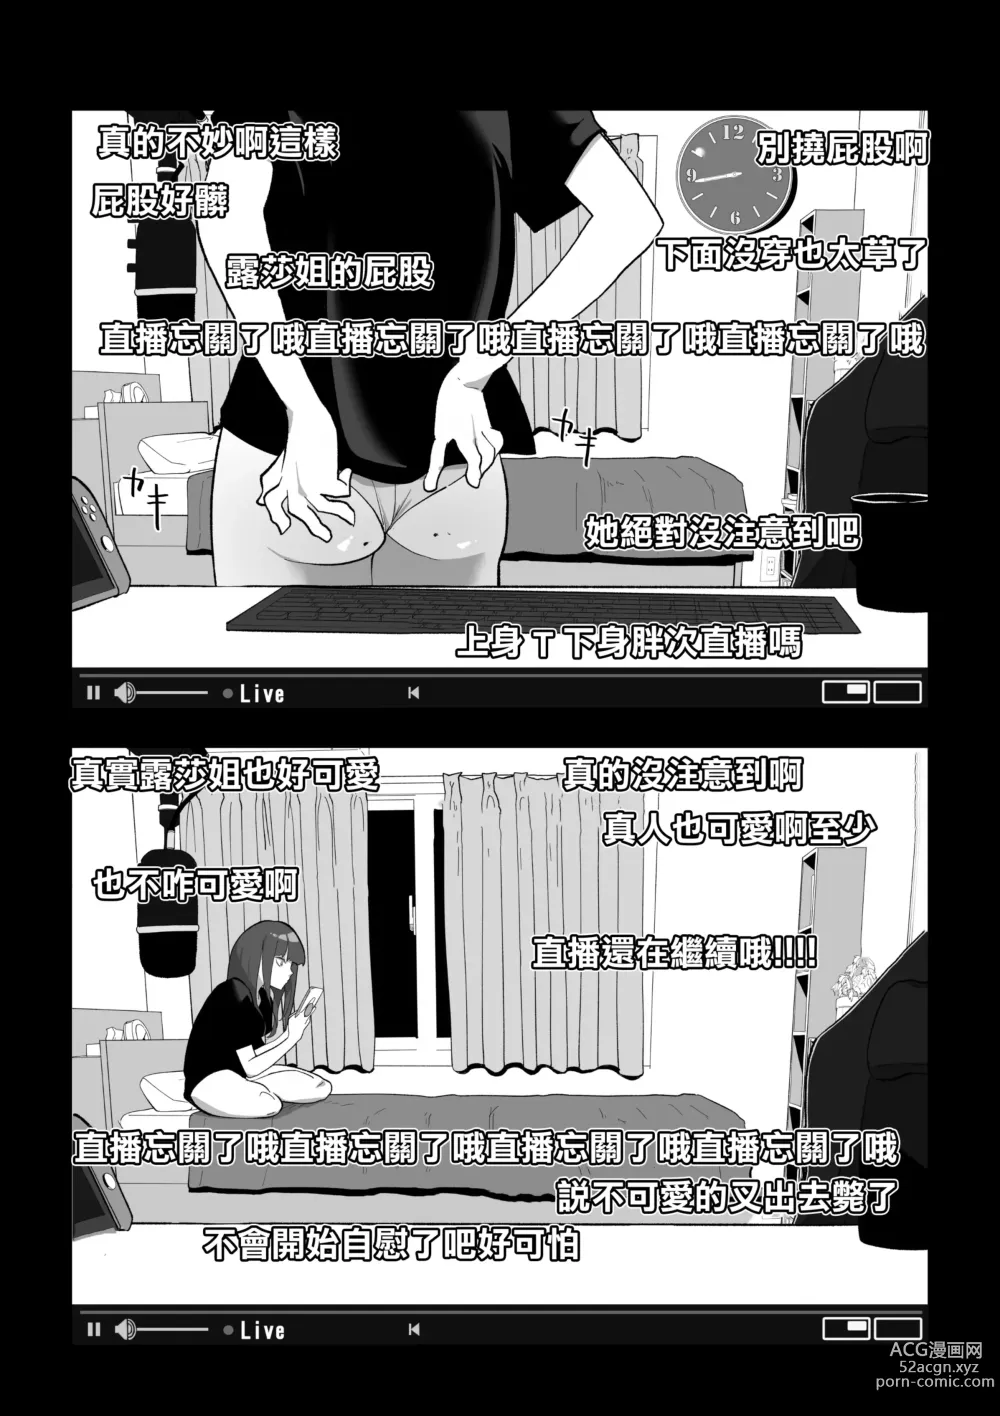 Page 7 of doujinshi 忘關攝像頭後SEX直播少女